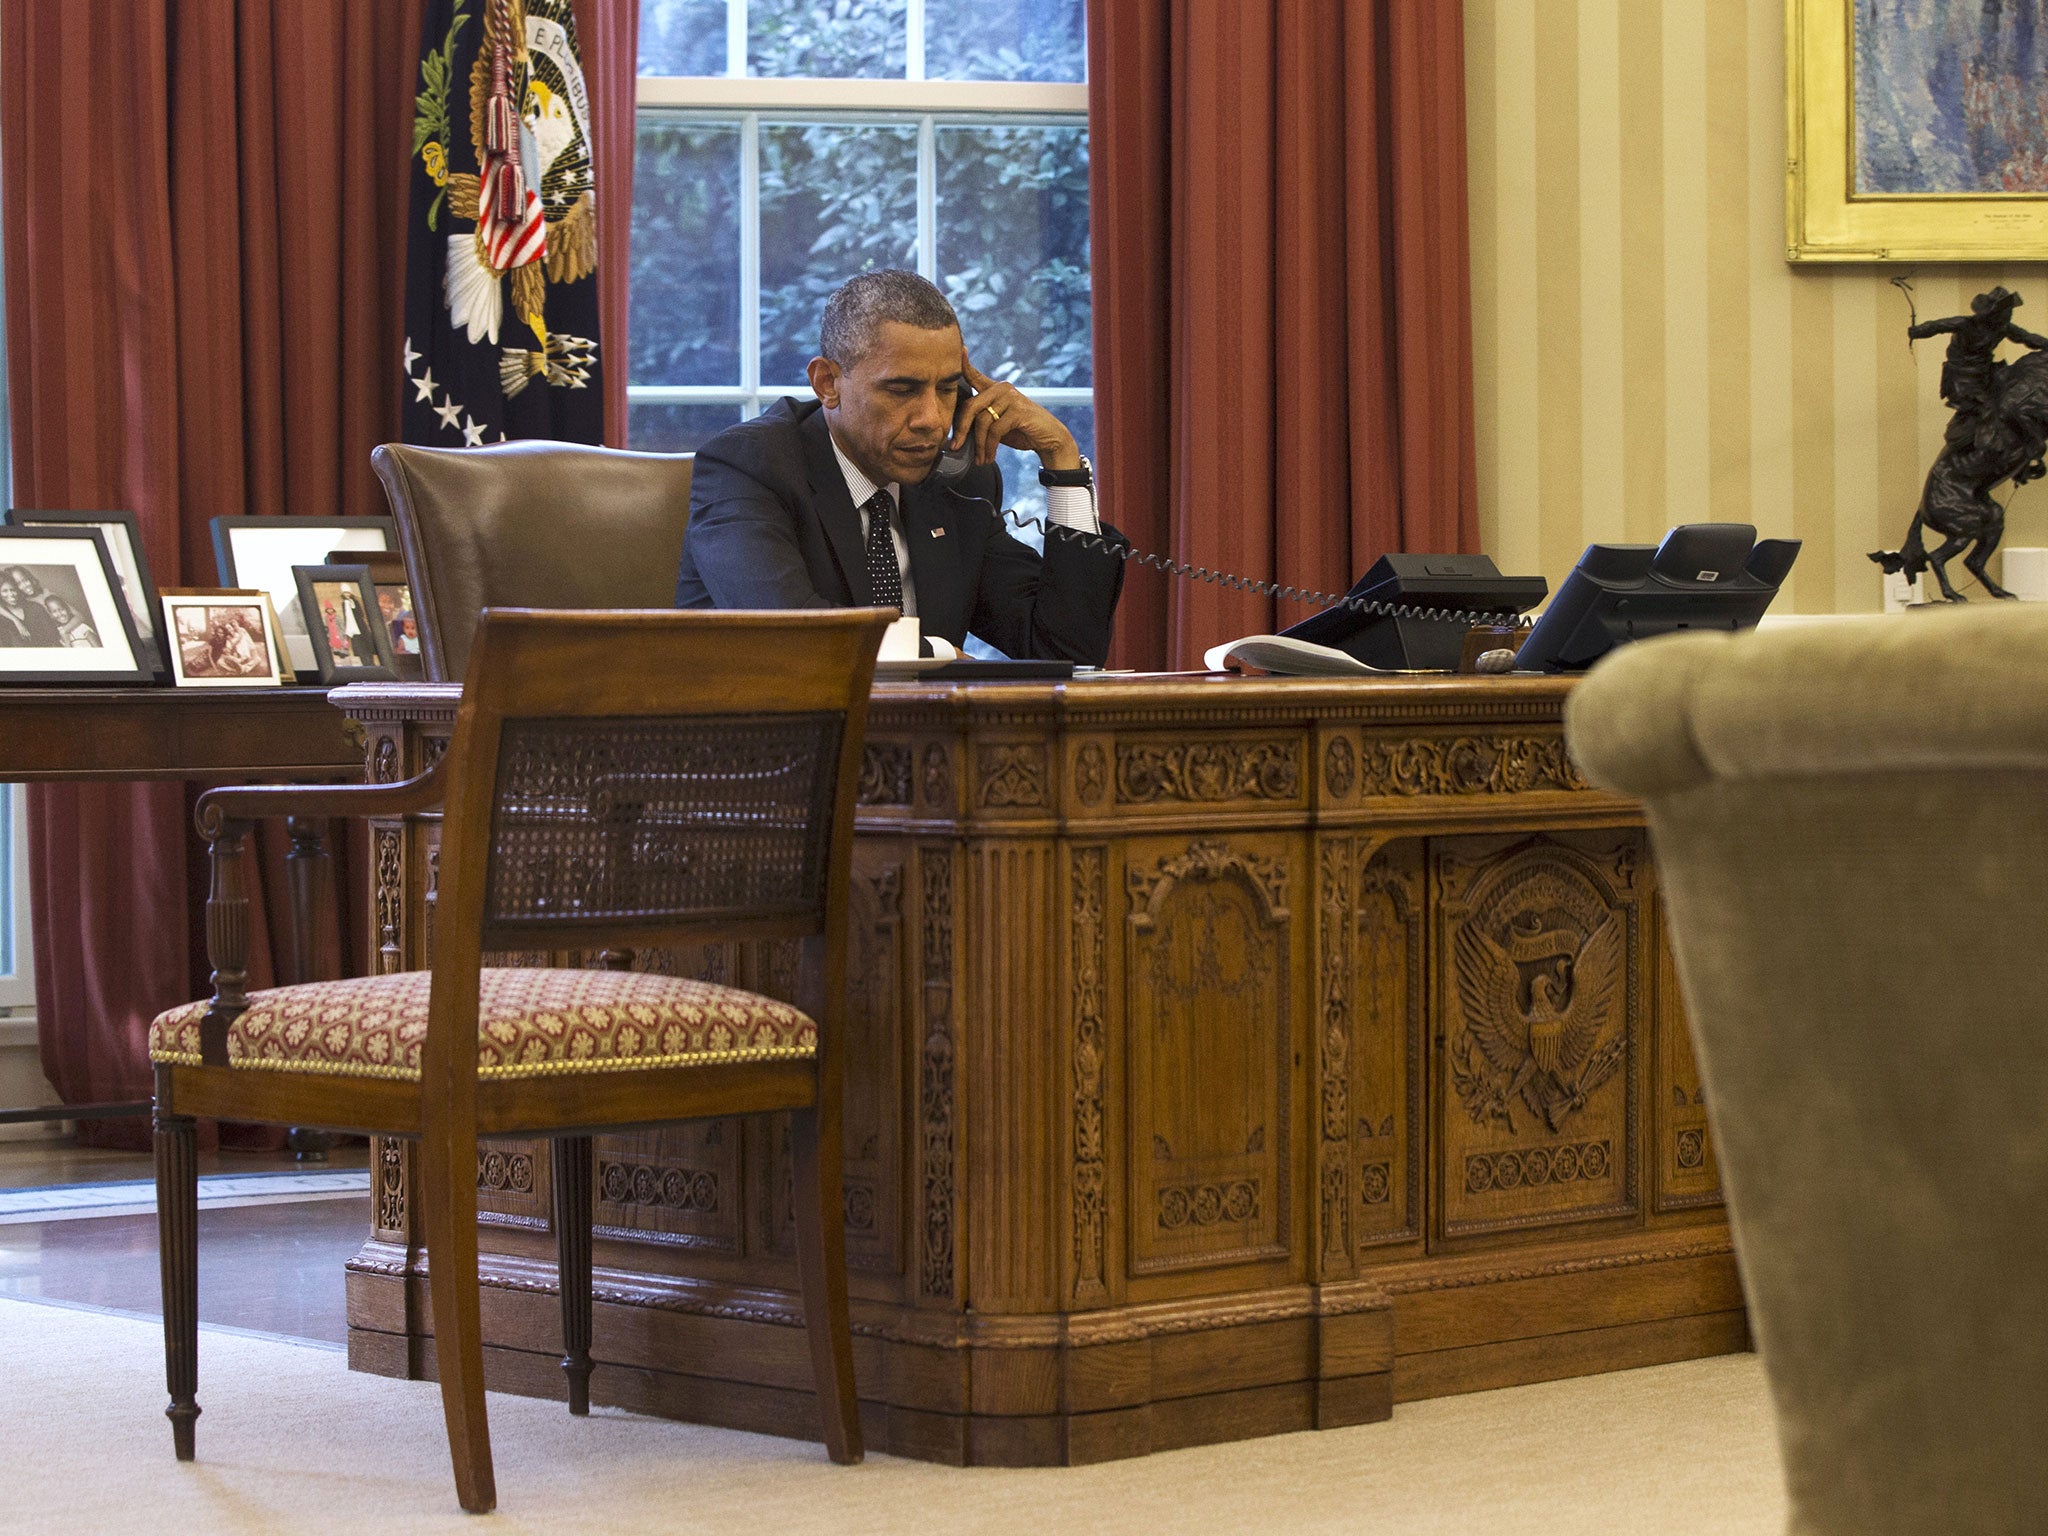 Barack Obama speaks to King Abdullah II of Jordan in the Oval Office yesterday